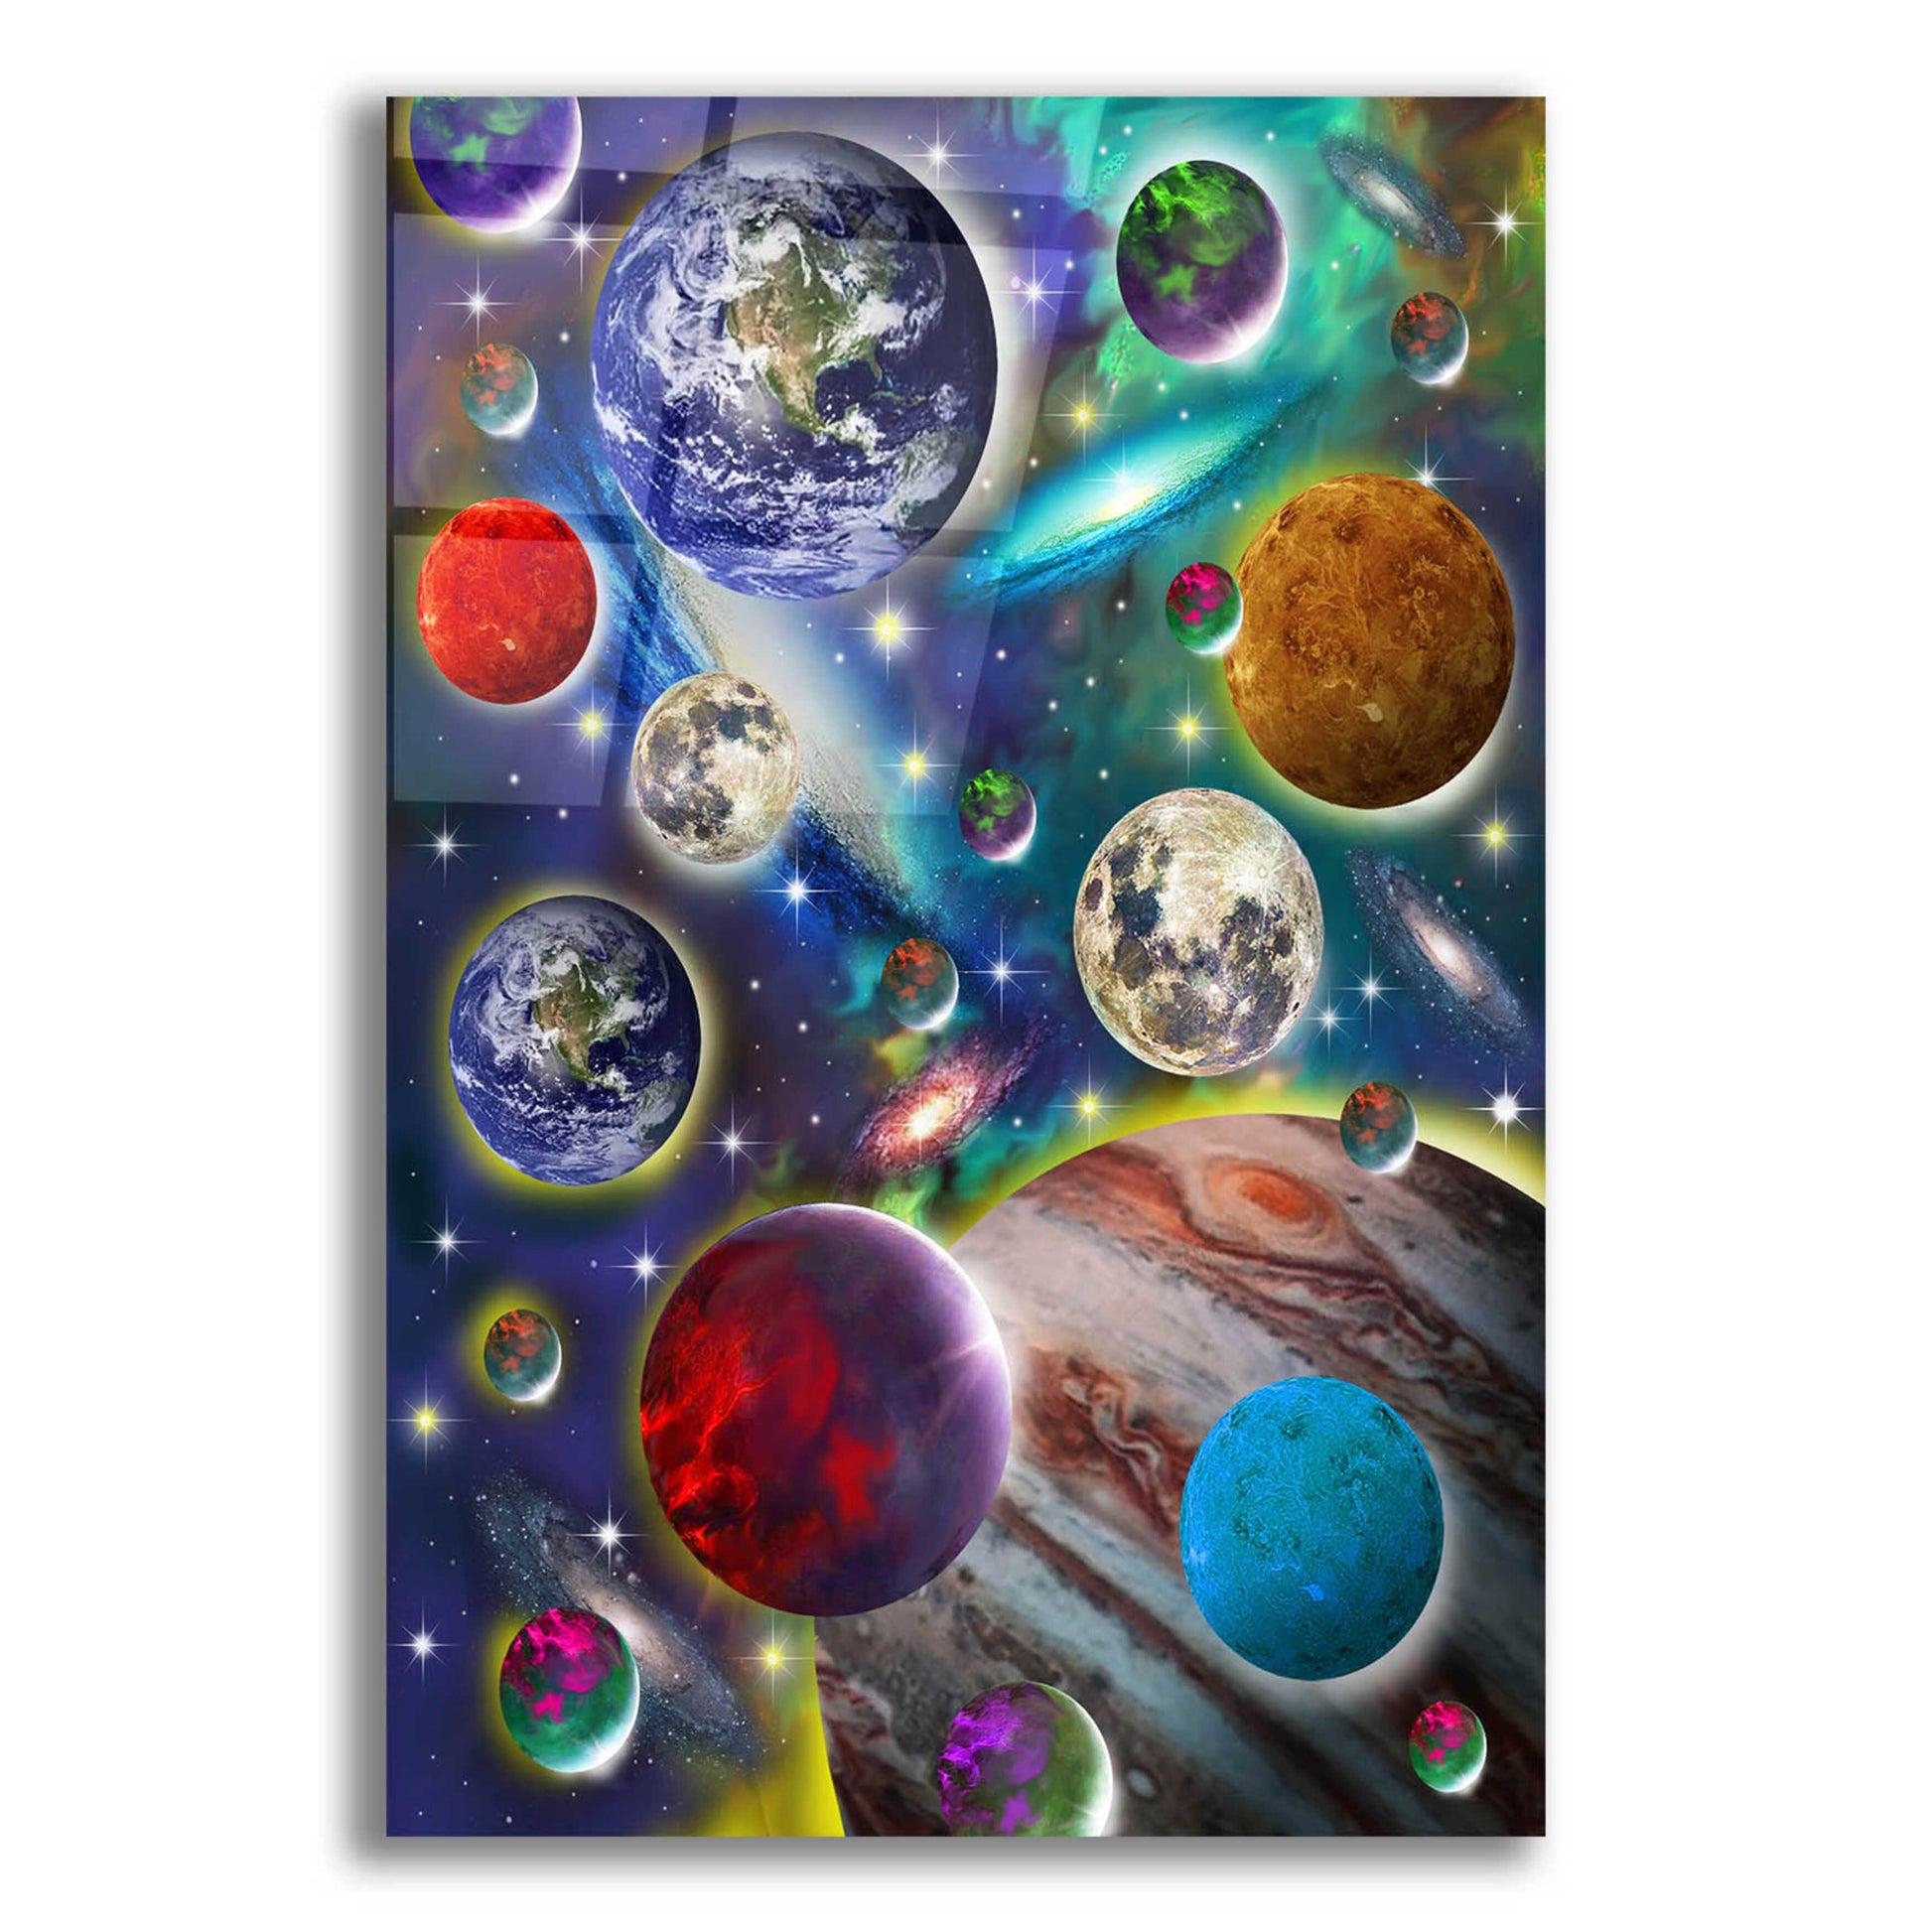 Epic Art 'Cosmic Planets' by Enright, Acrylic Glass Wall Art,16x24